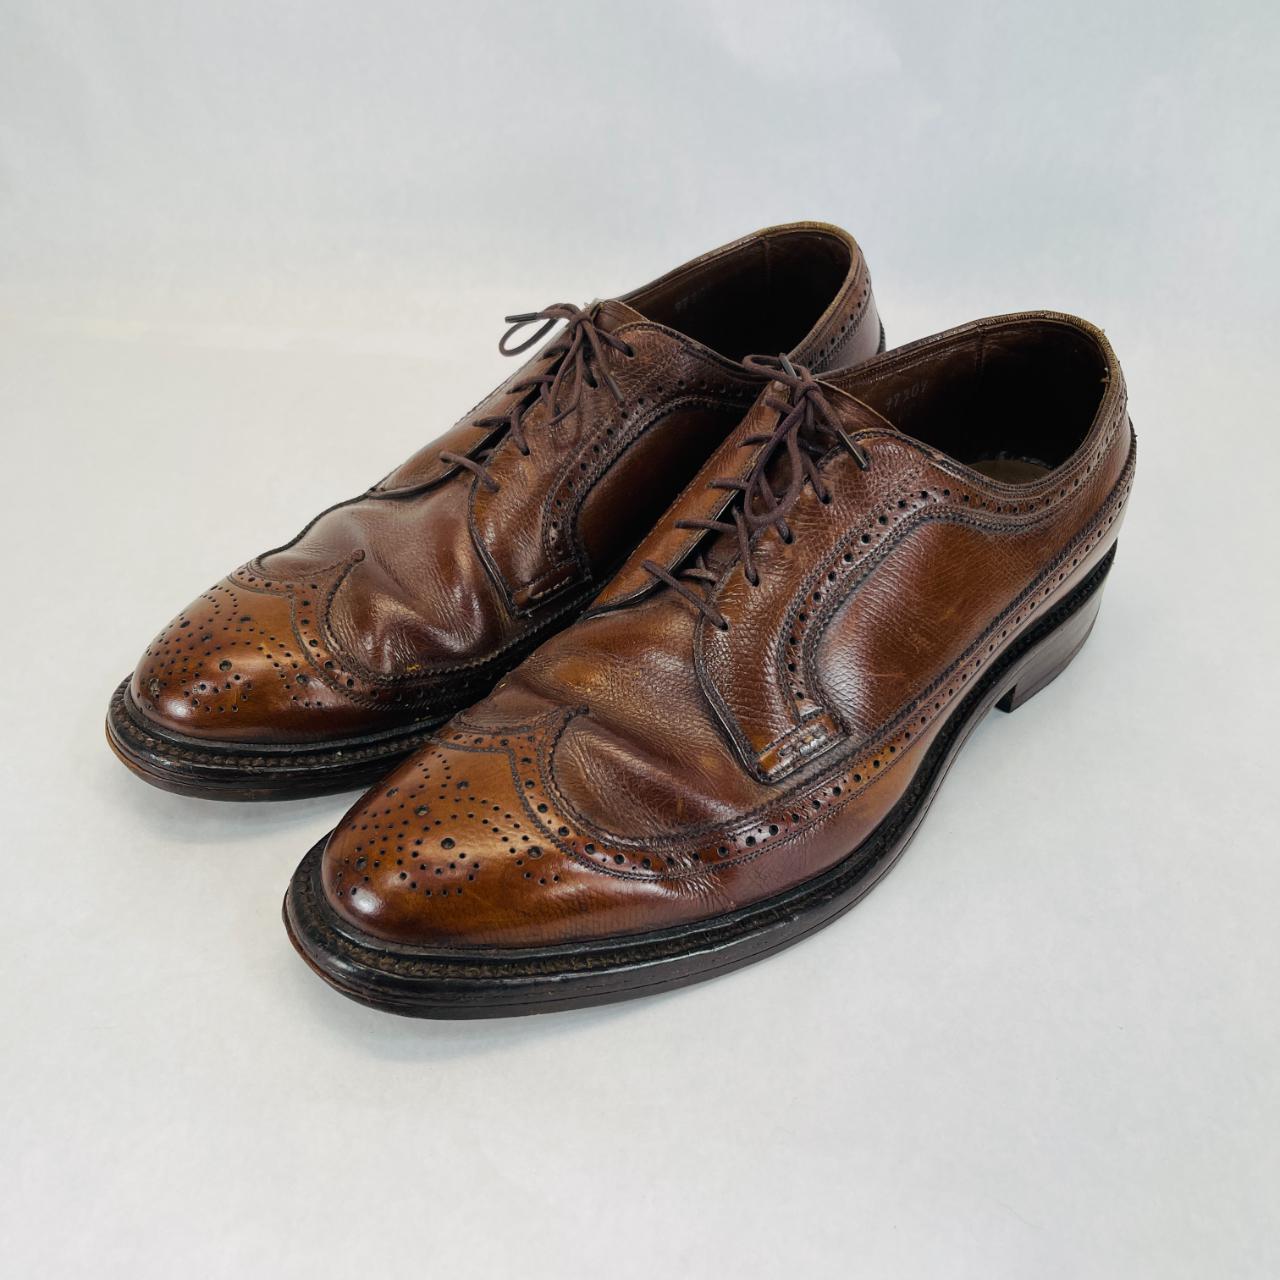 Allen Edmonds MacNeil Brown Leather Wingtips Full... - Depop